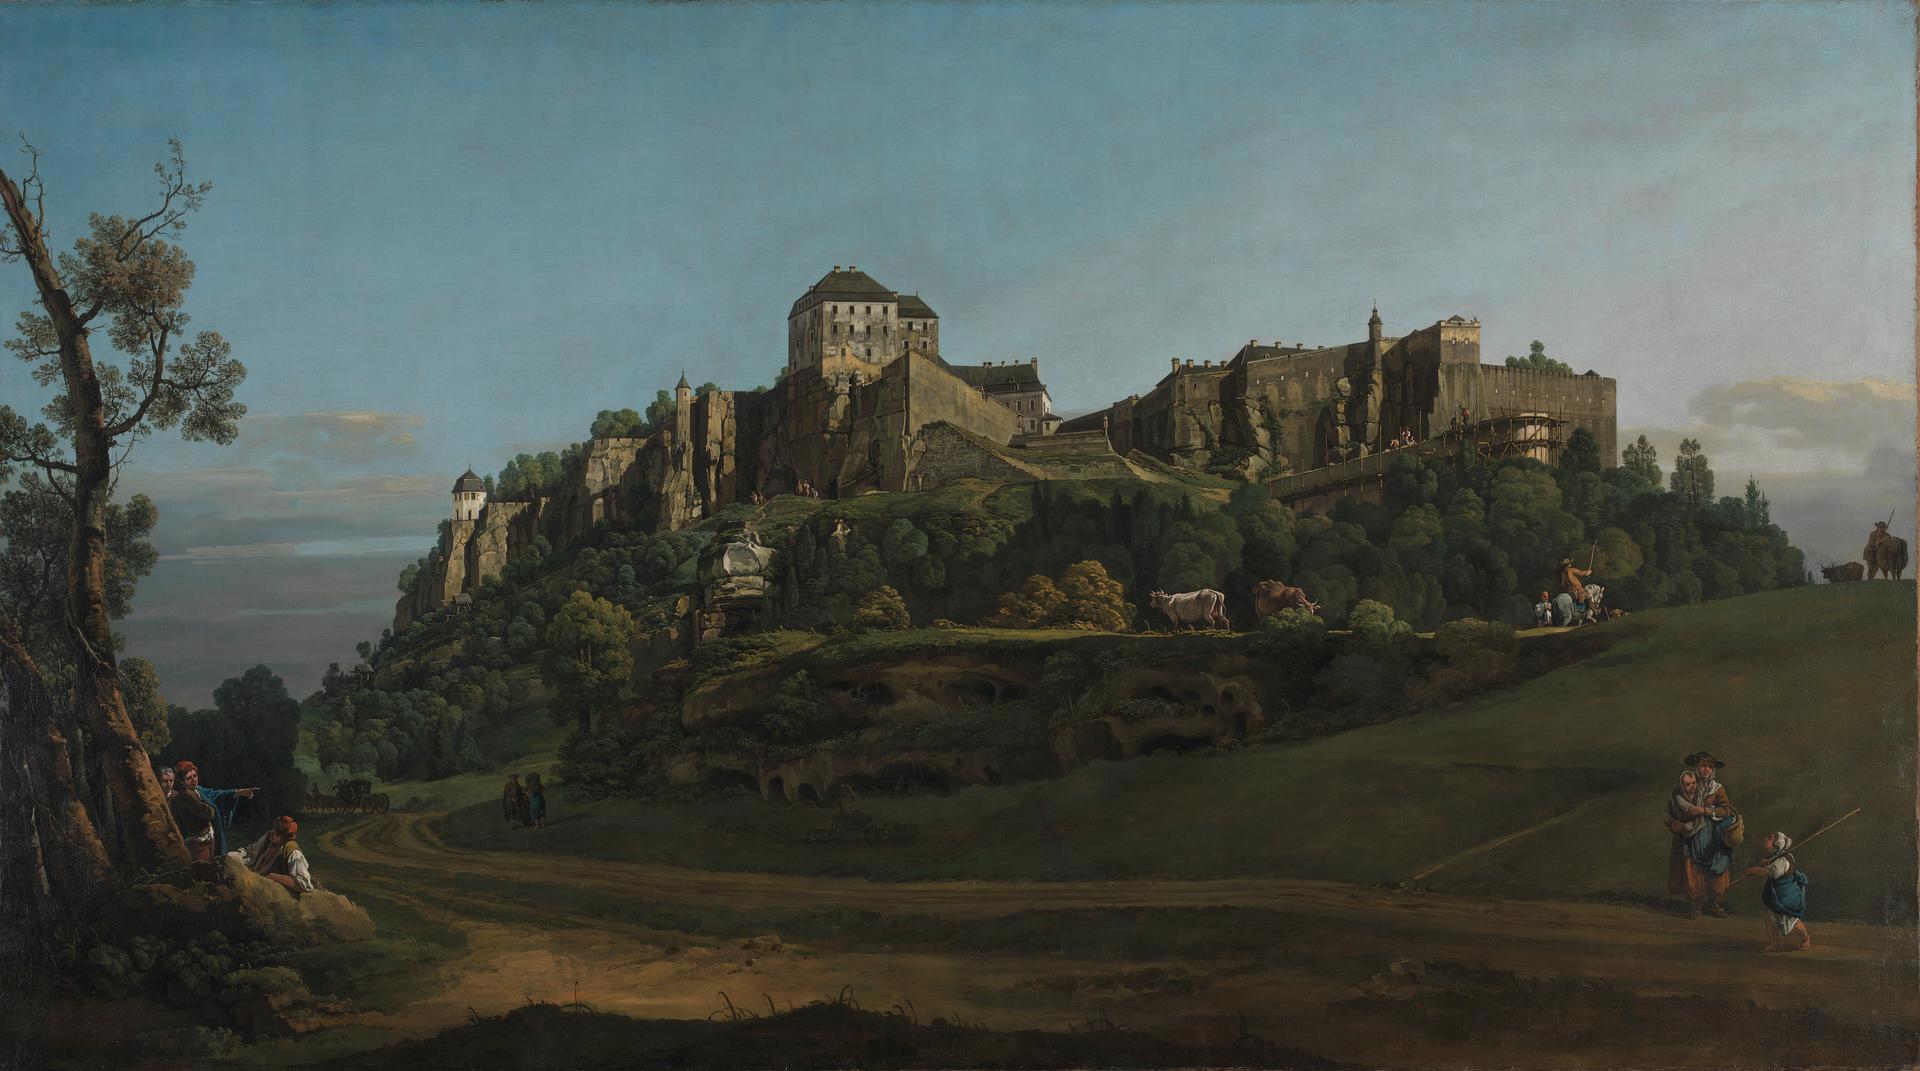 The Fortress of Königstein